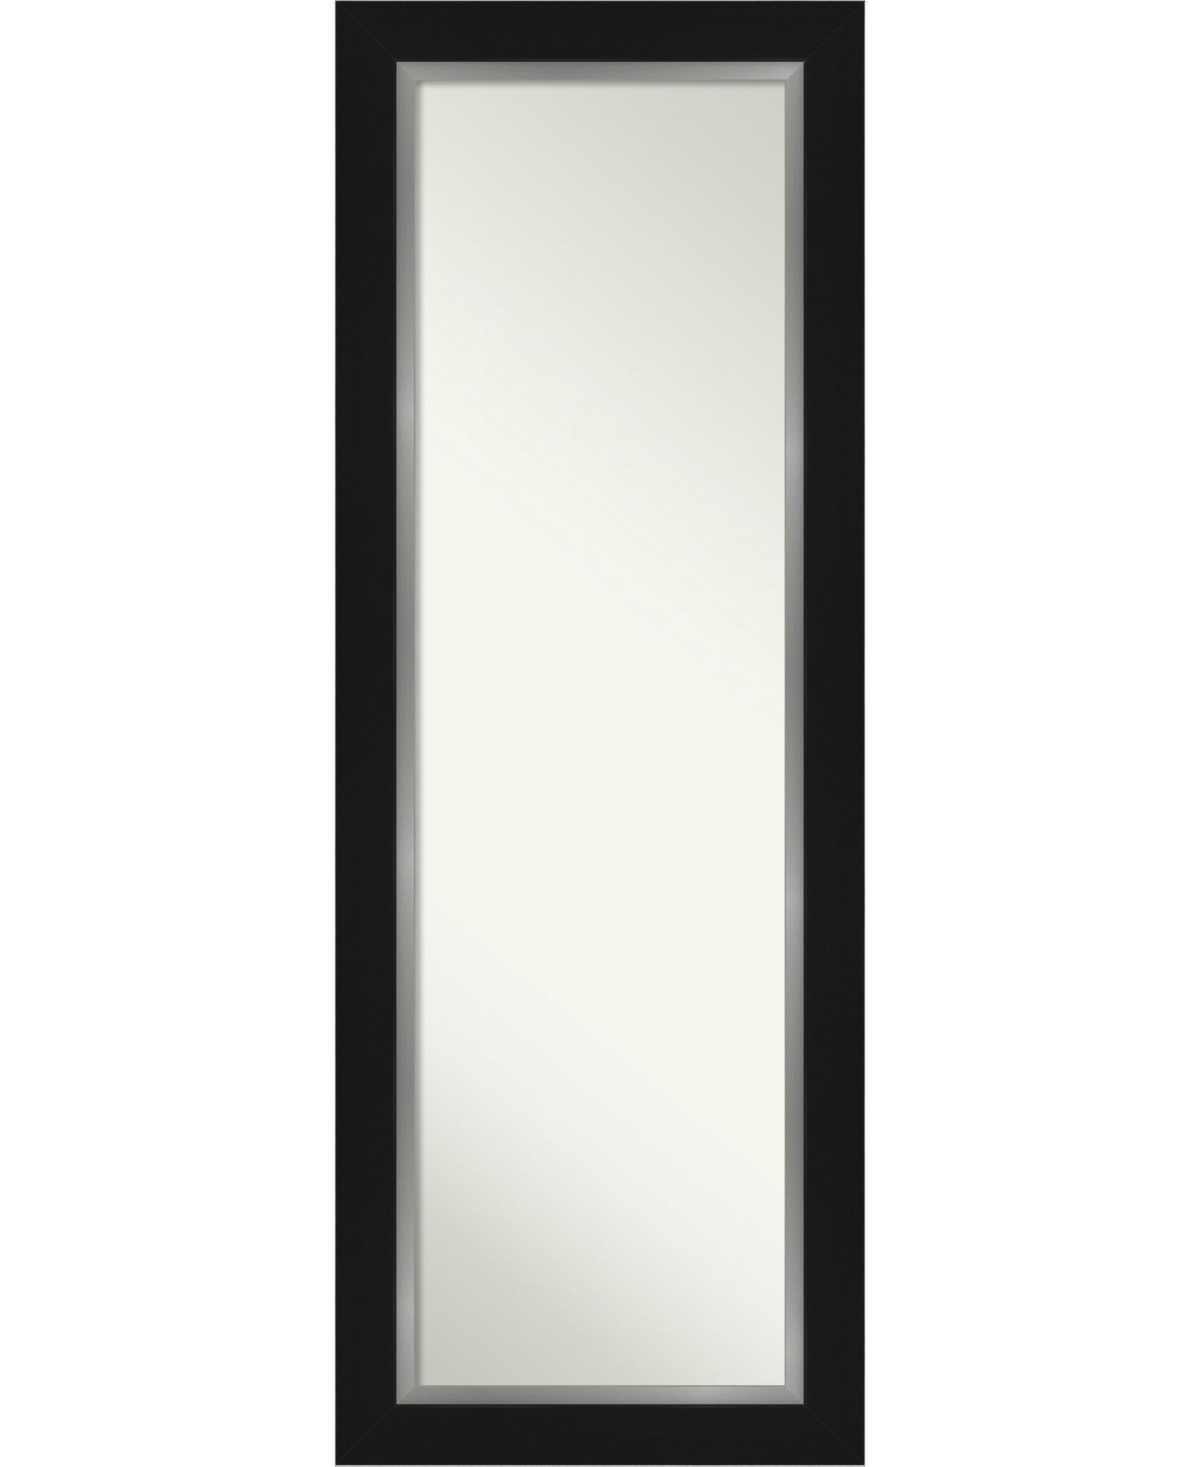 Eva Silver-tone on The Door Full Length Mirror, 19.25" x 53.25" - Black